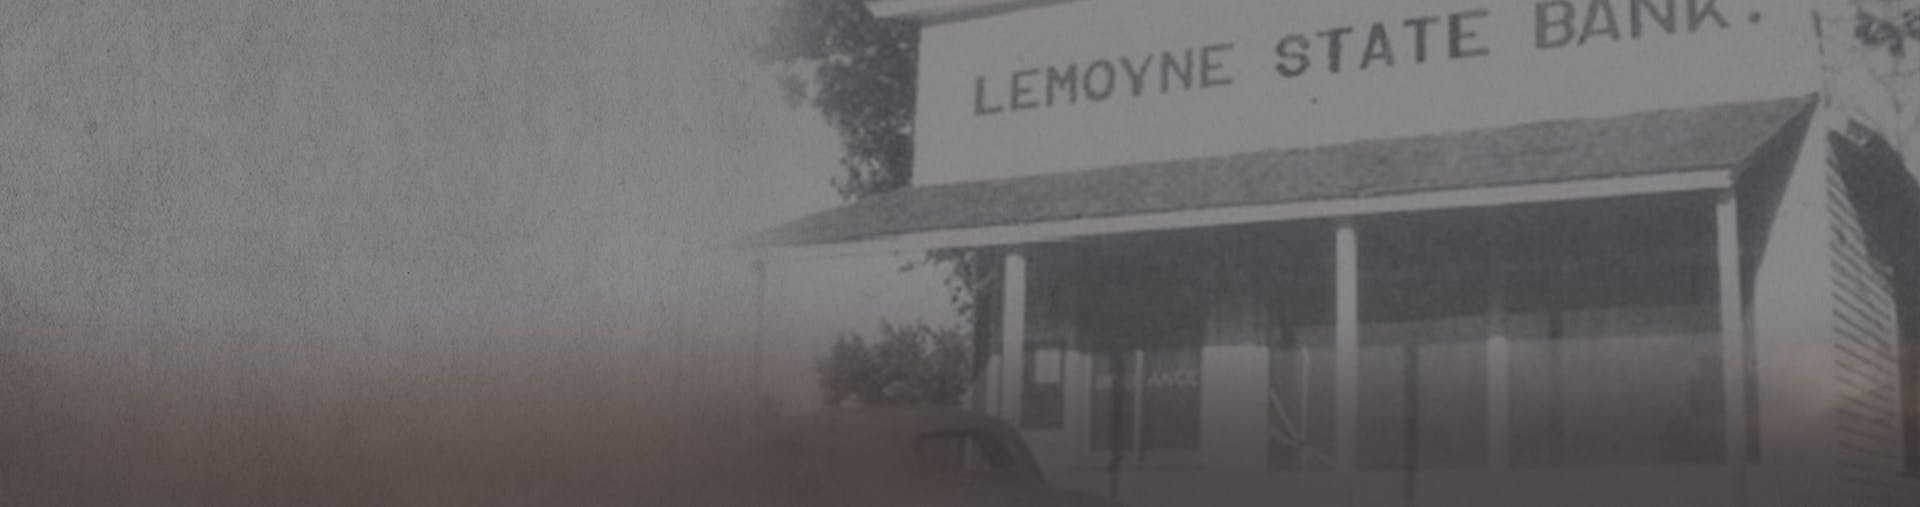 Lemoyne State Bank